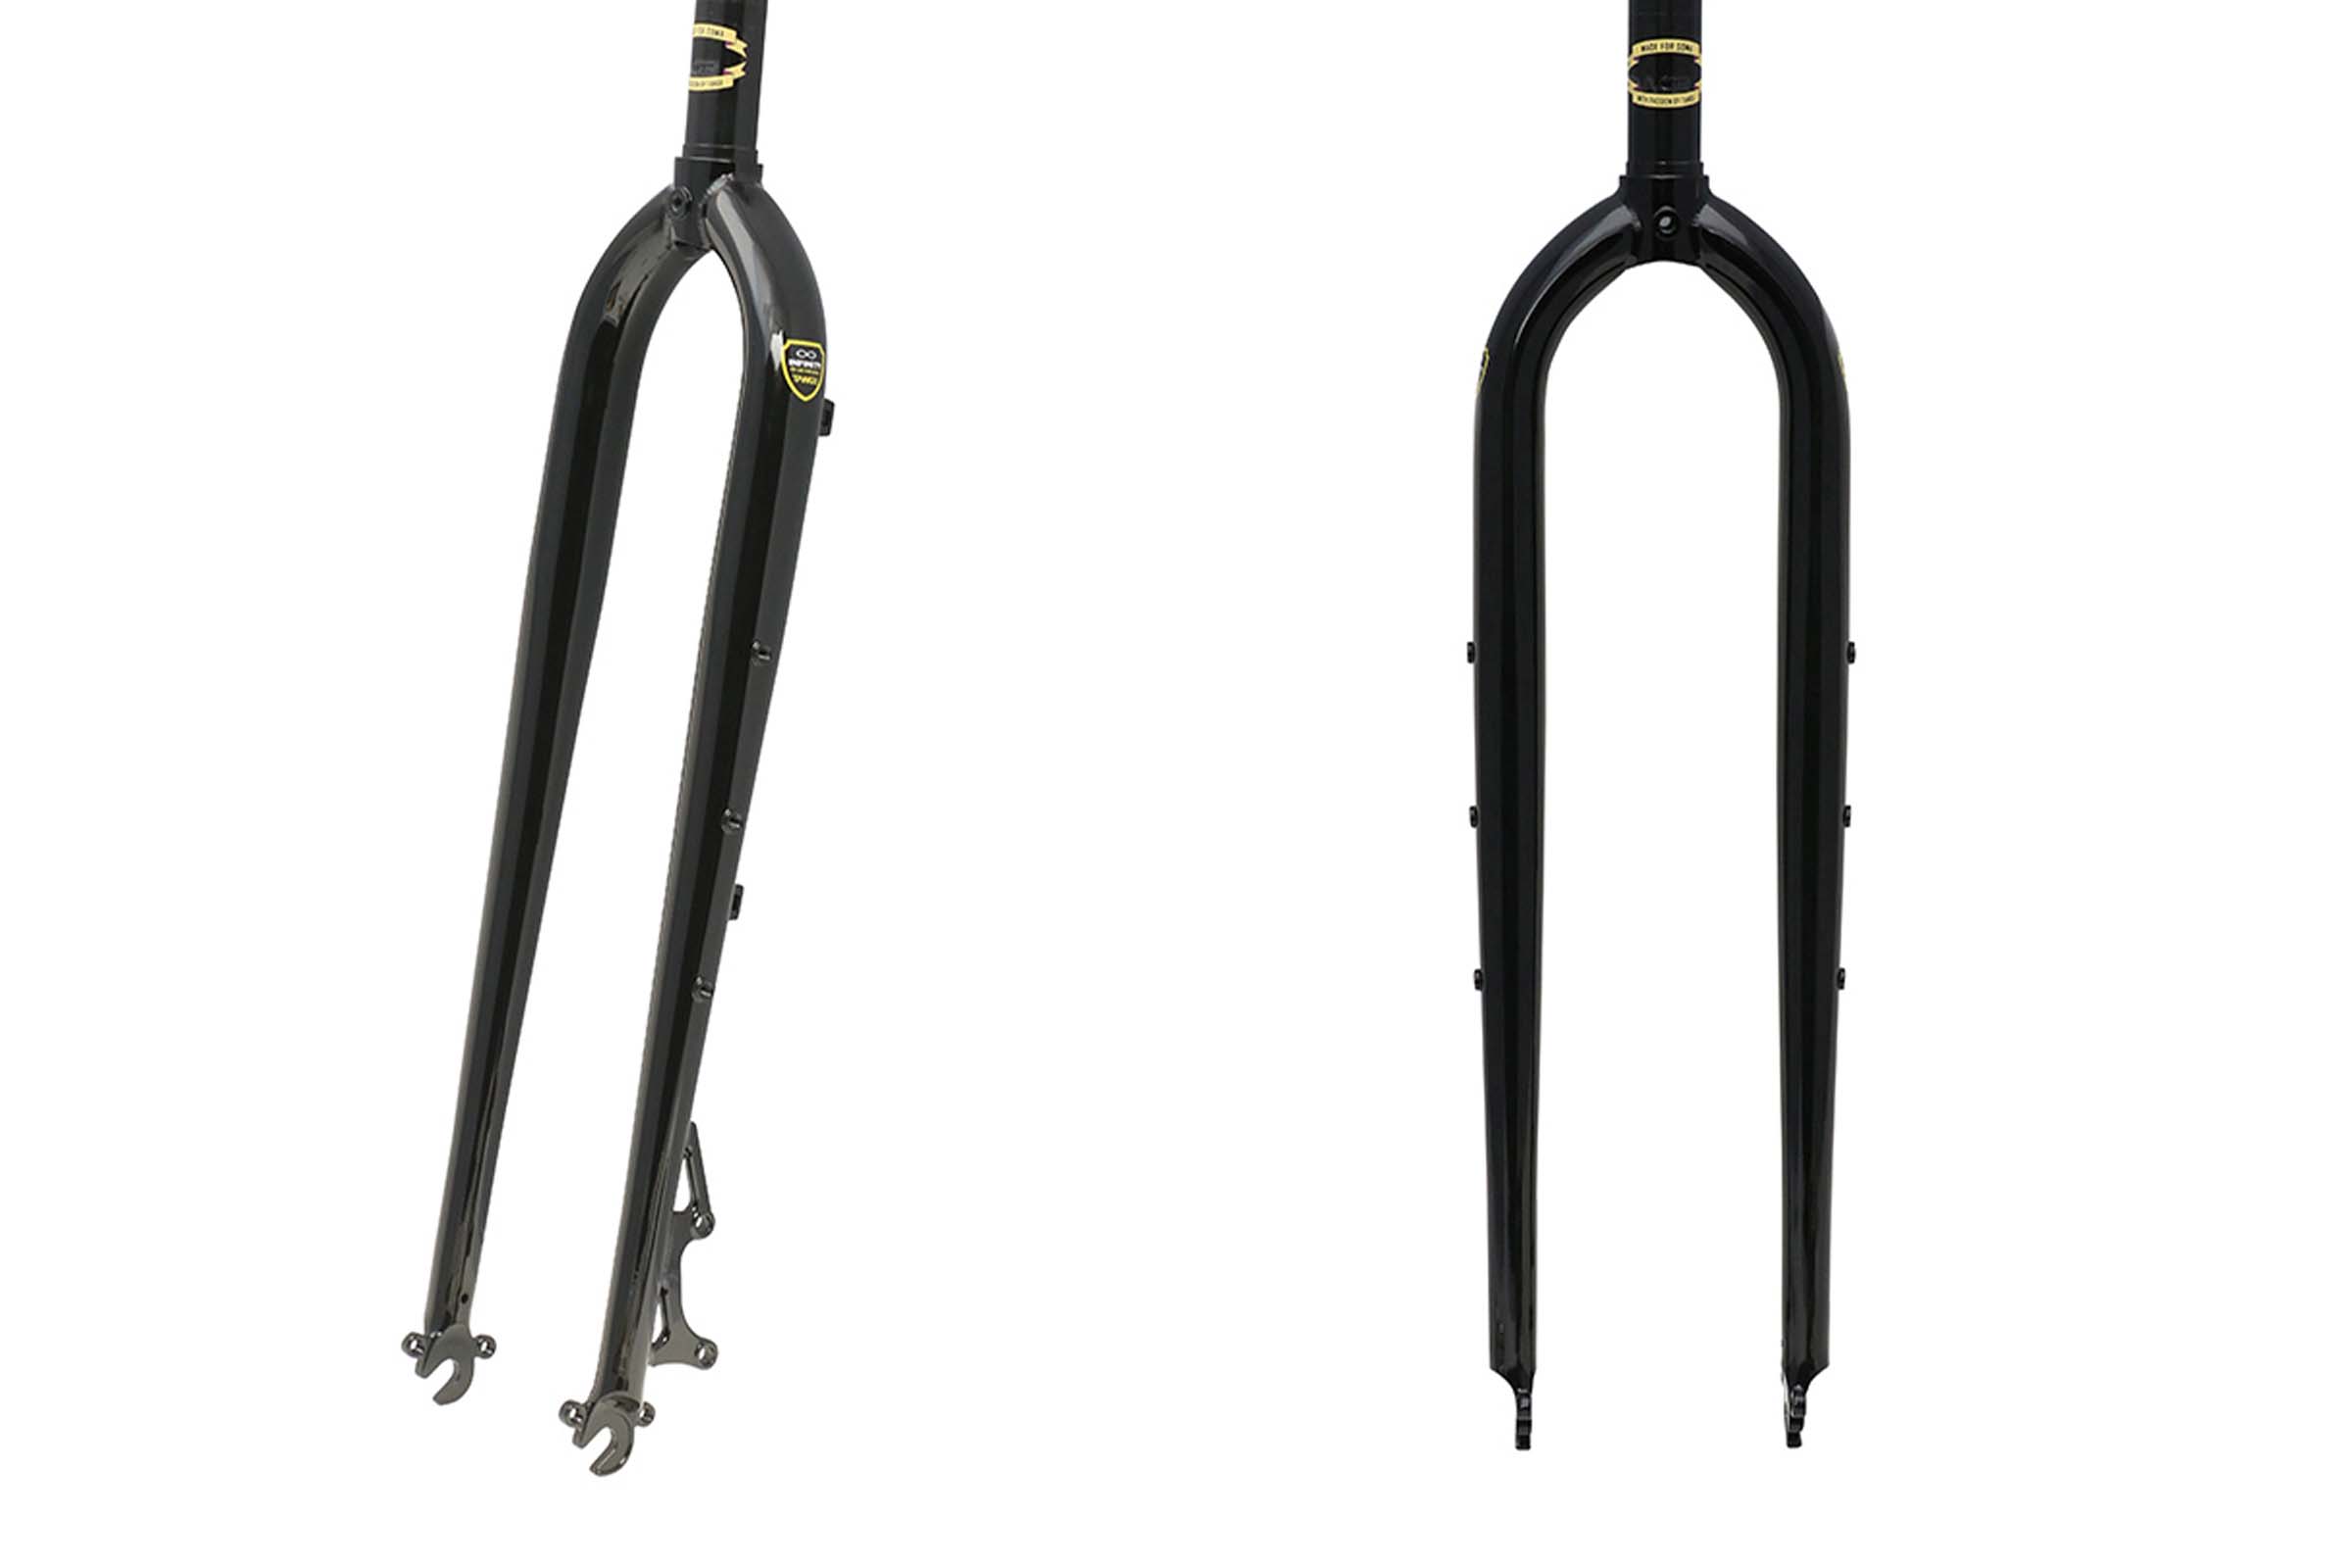 Two New Rigid Bikepacking Fork Options from Soma - BIKEPACKING.com